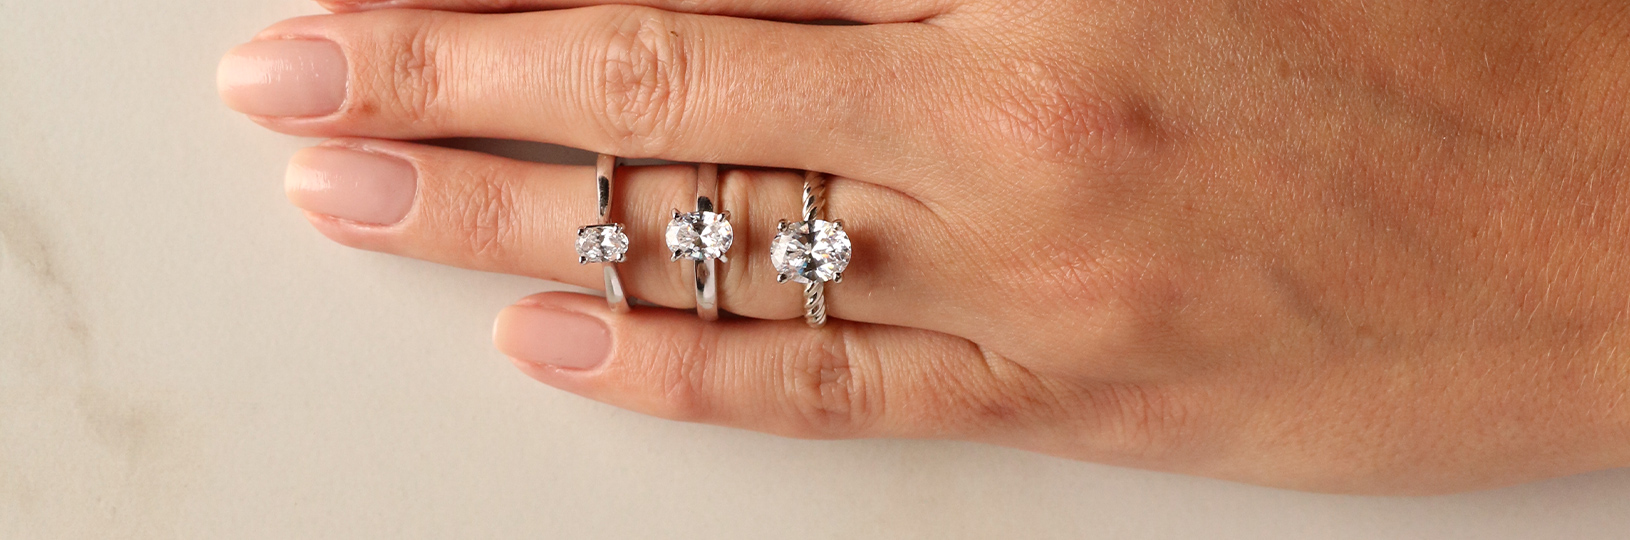 three simple engagement rings